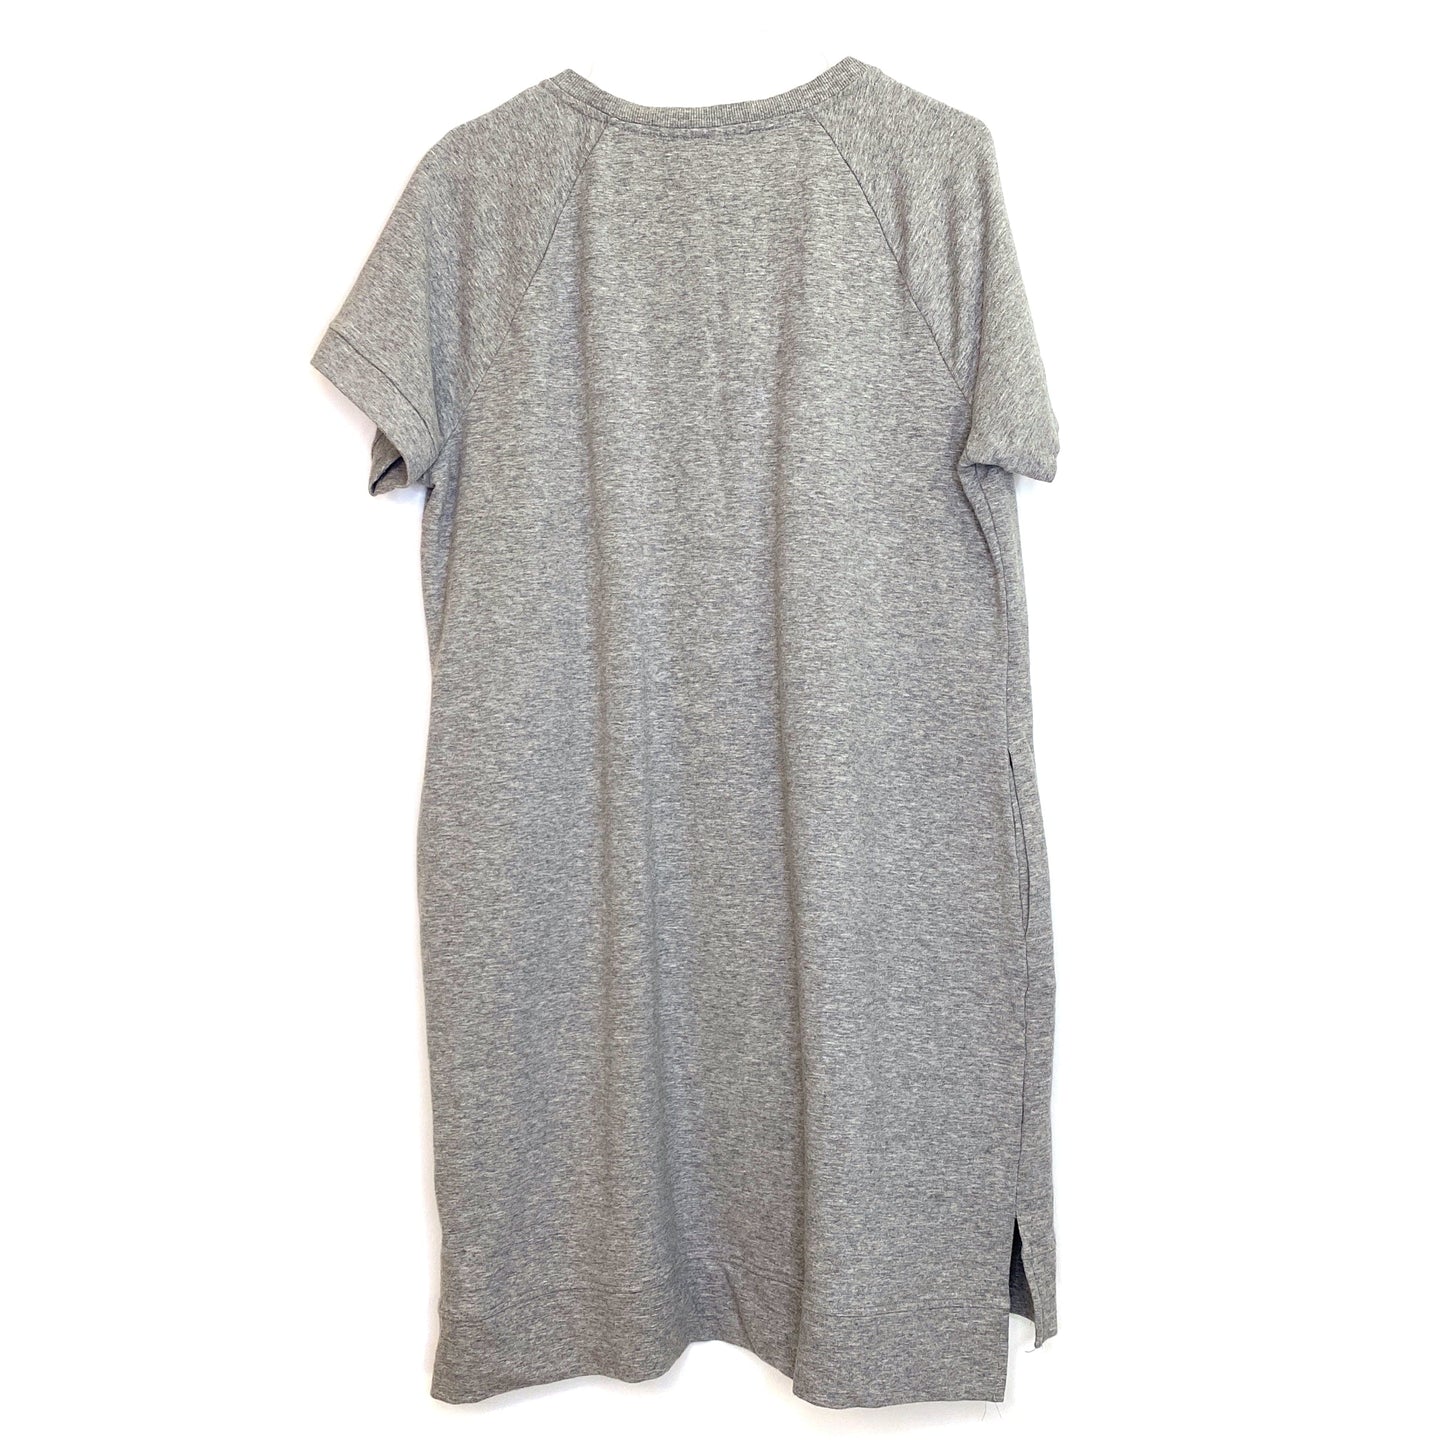 Life Worx by Gloria Vanderbilt Missy Juniors Size L Gray Sweatshirt Dress S/s